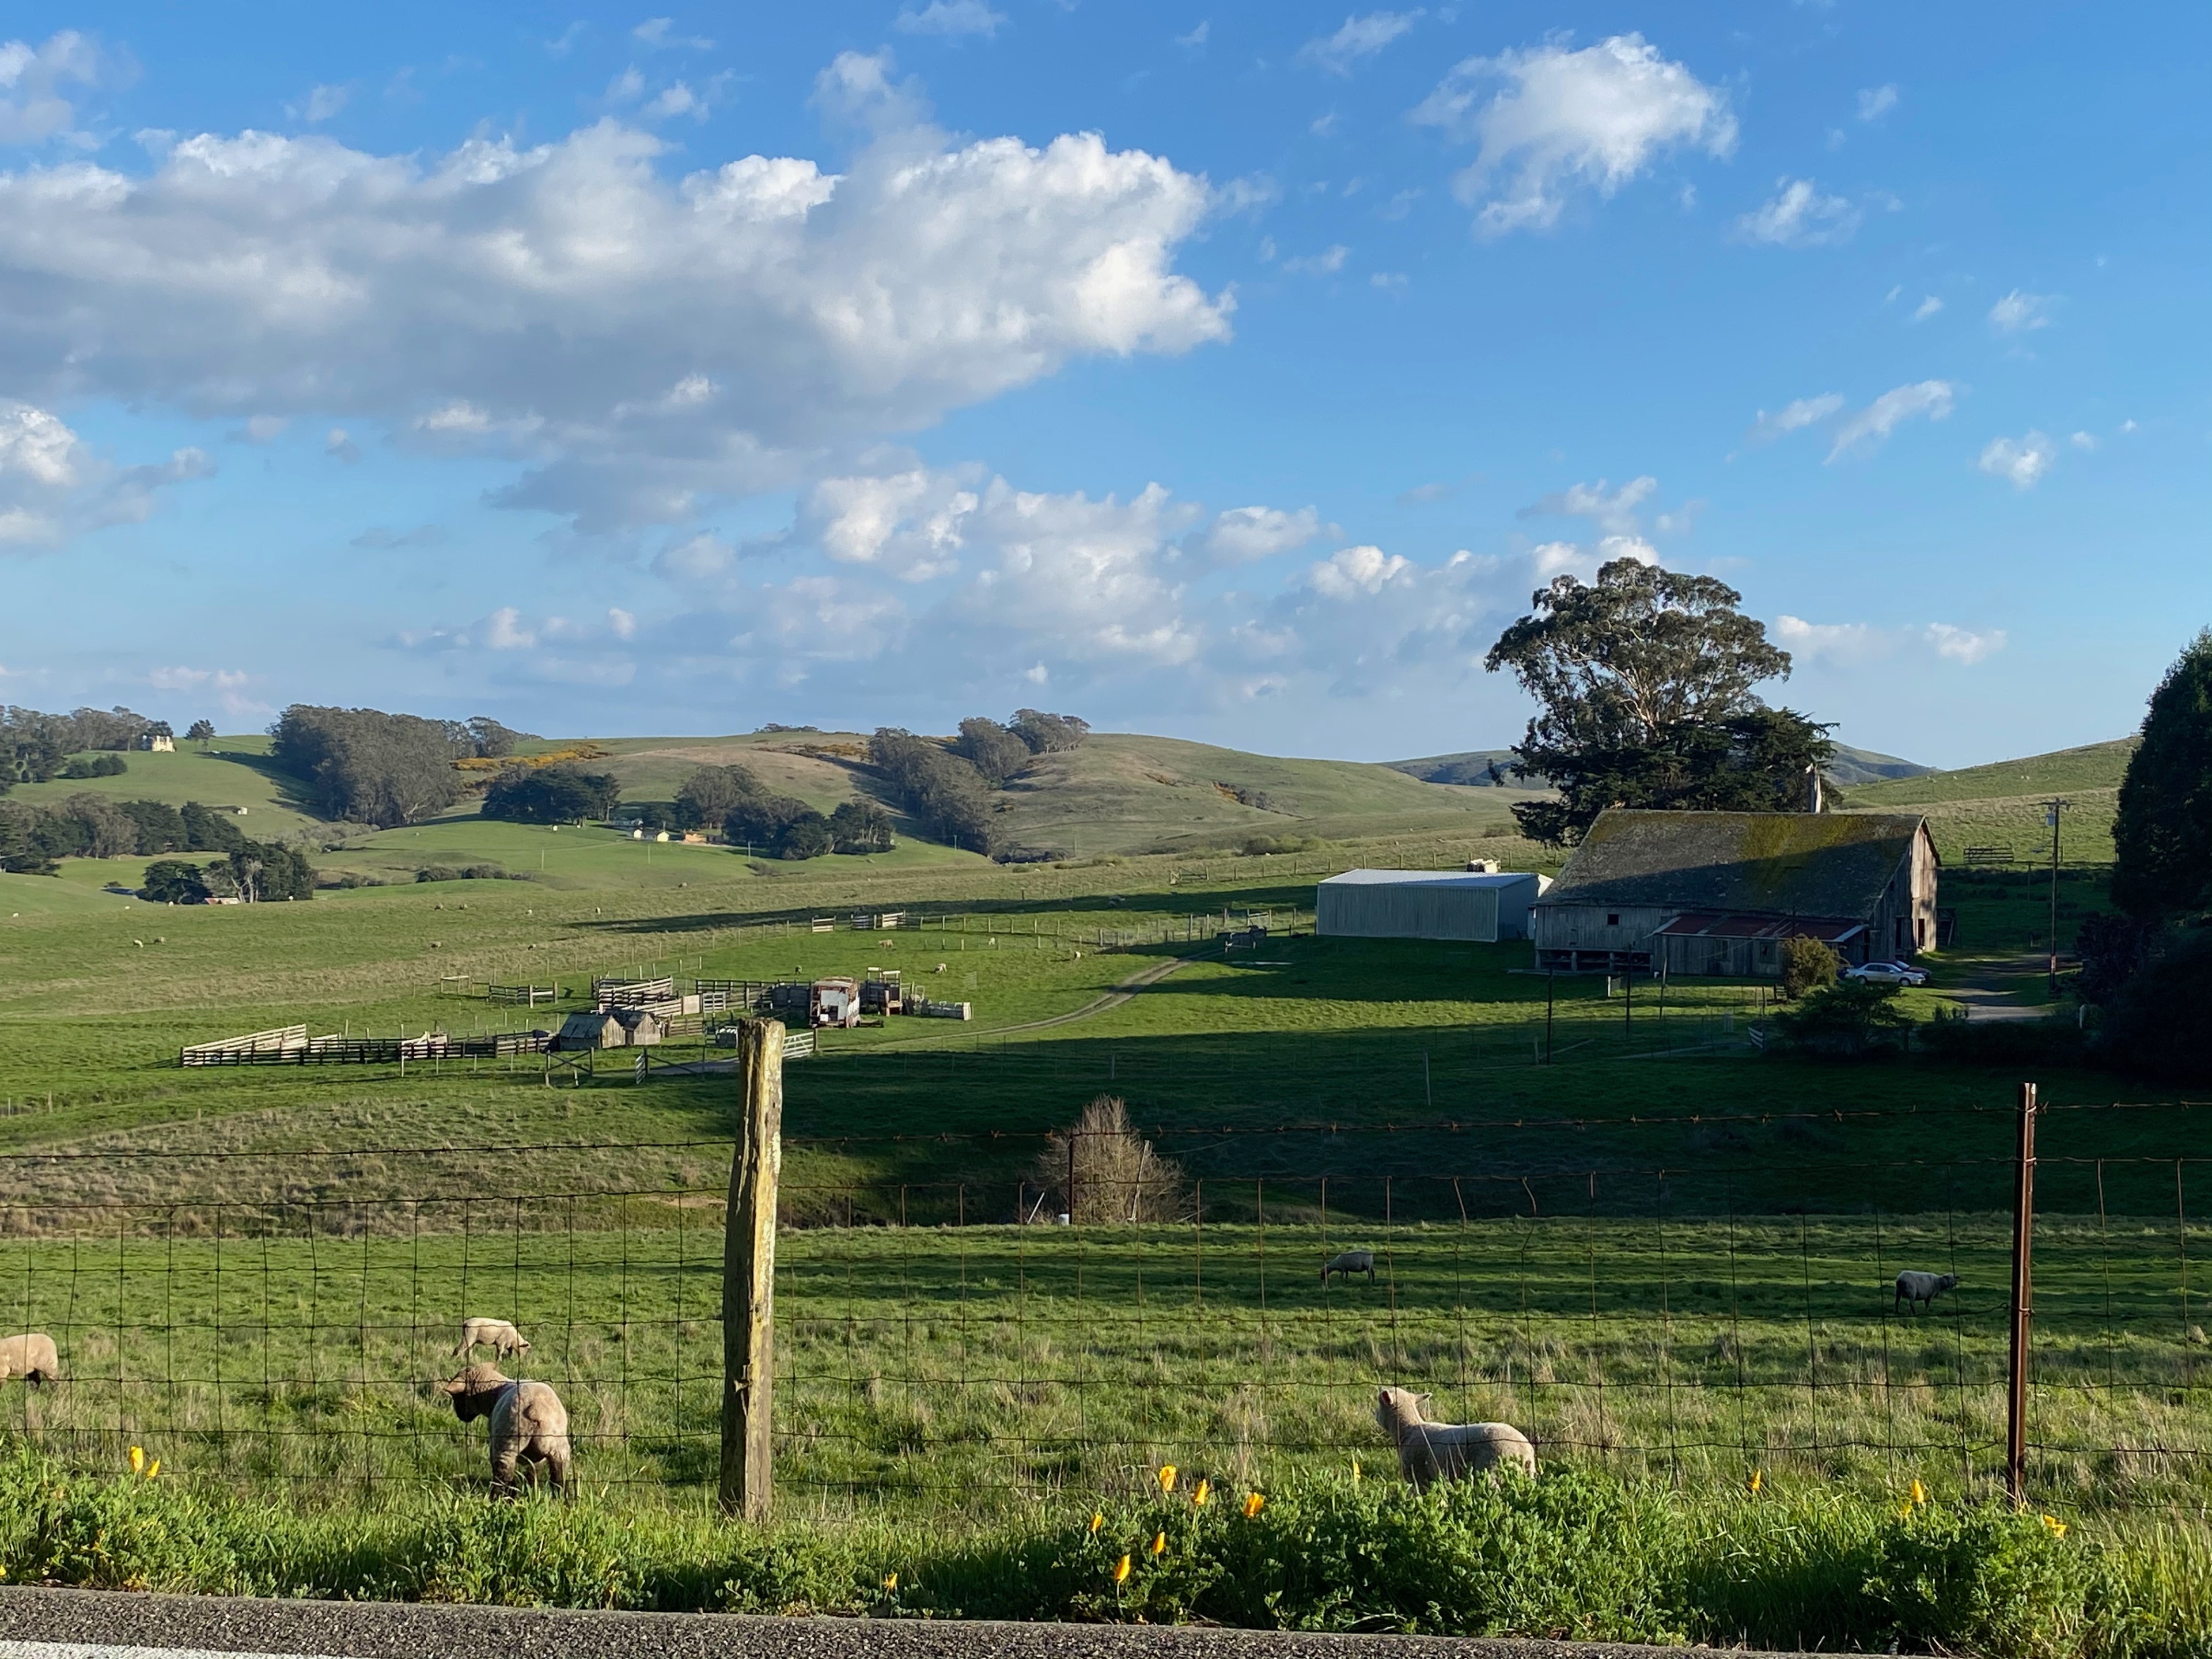 Sheep graze in a field under a blue sky.